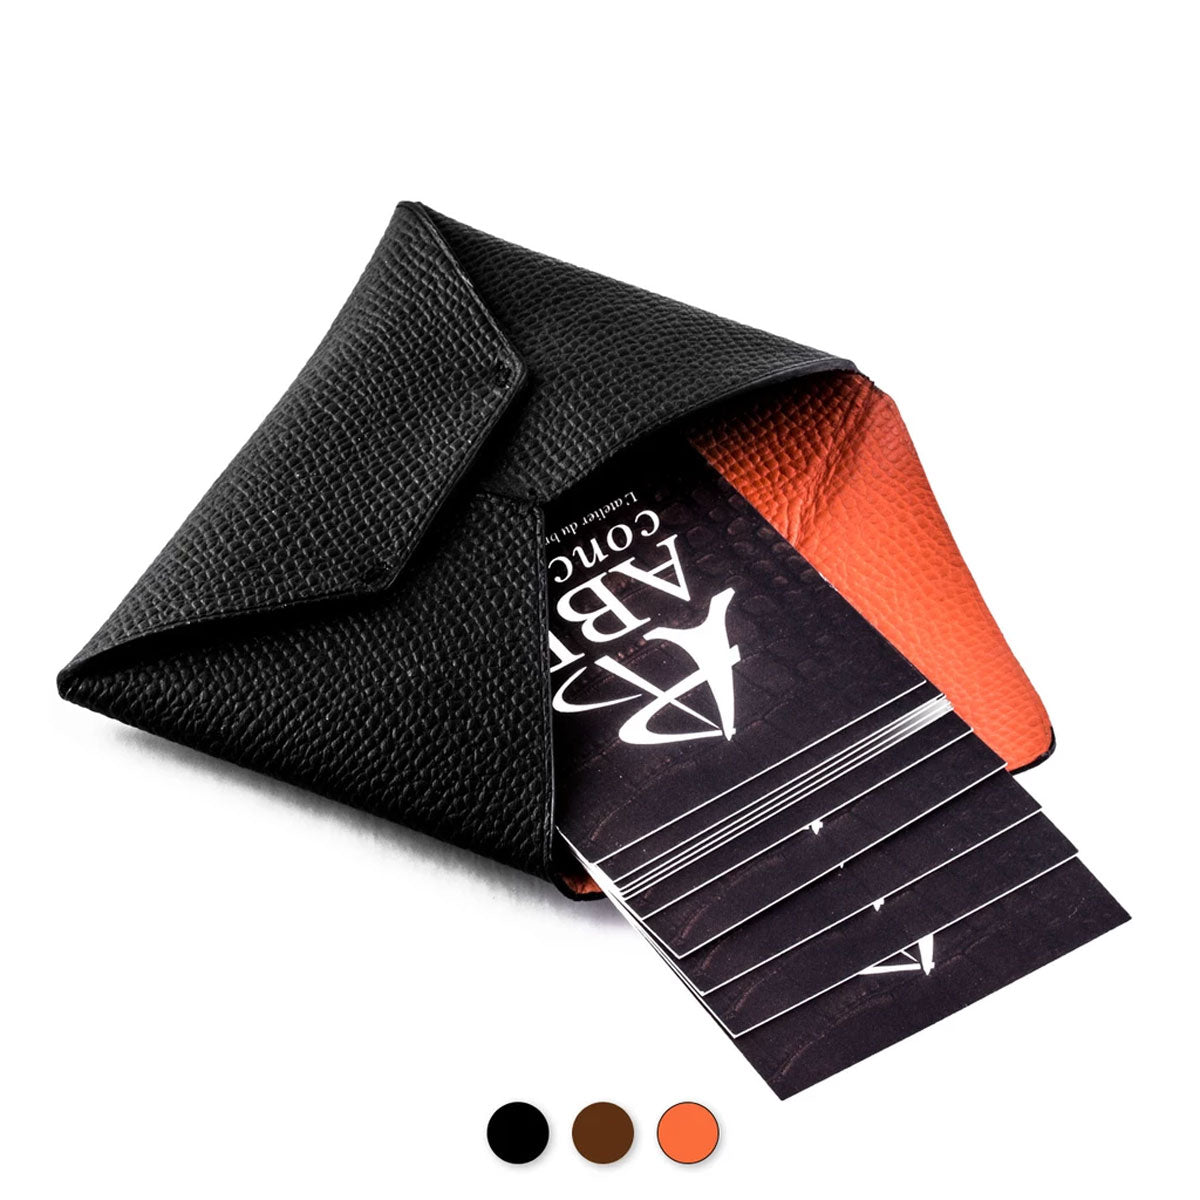 Enveloppe multi cartes cuir «Magellan» - watch band leather strap - ABP Concept -